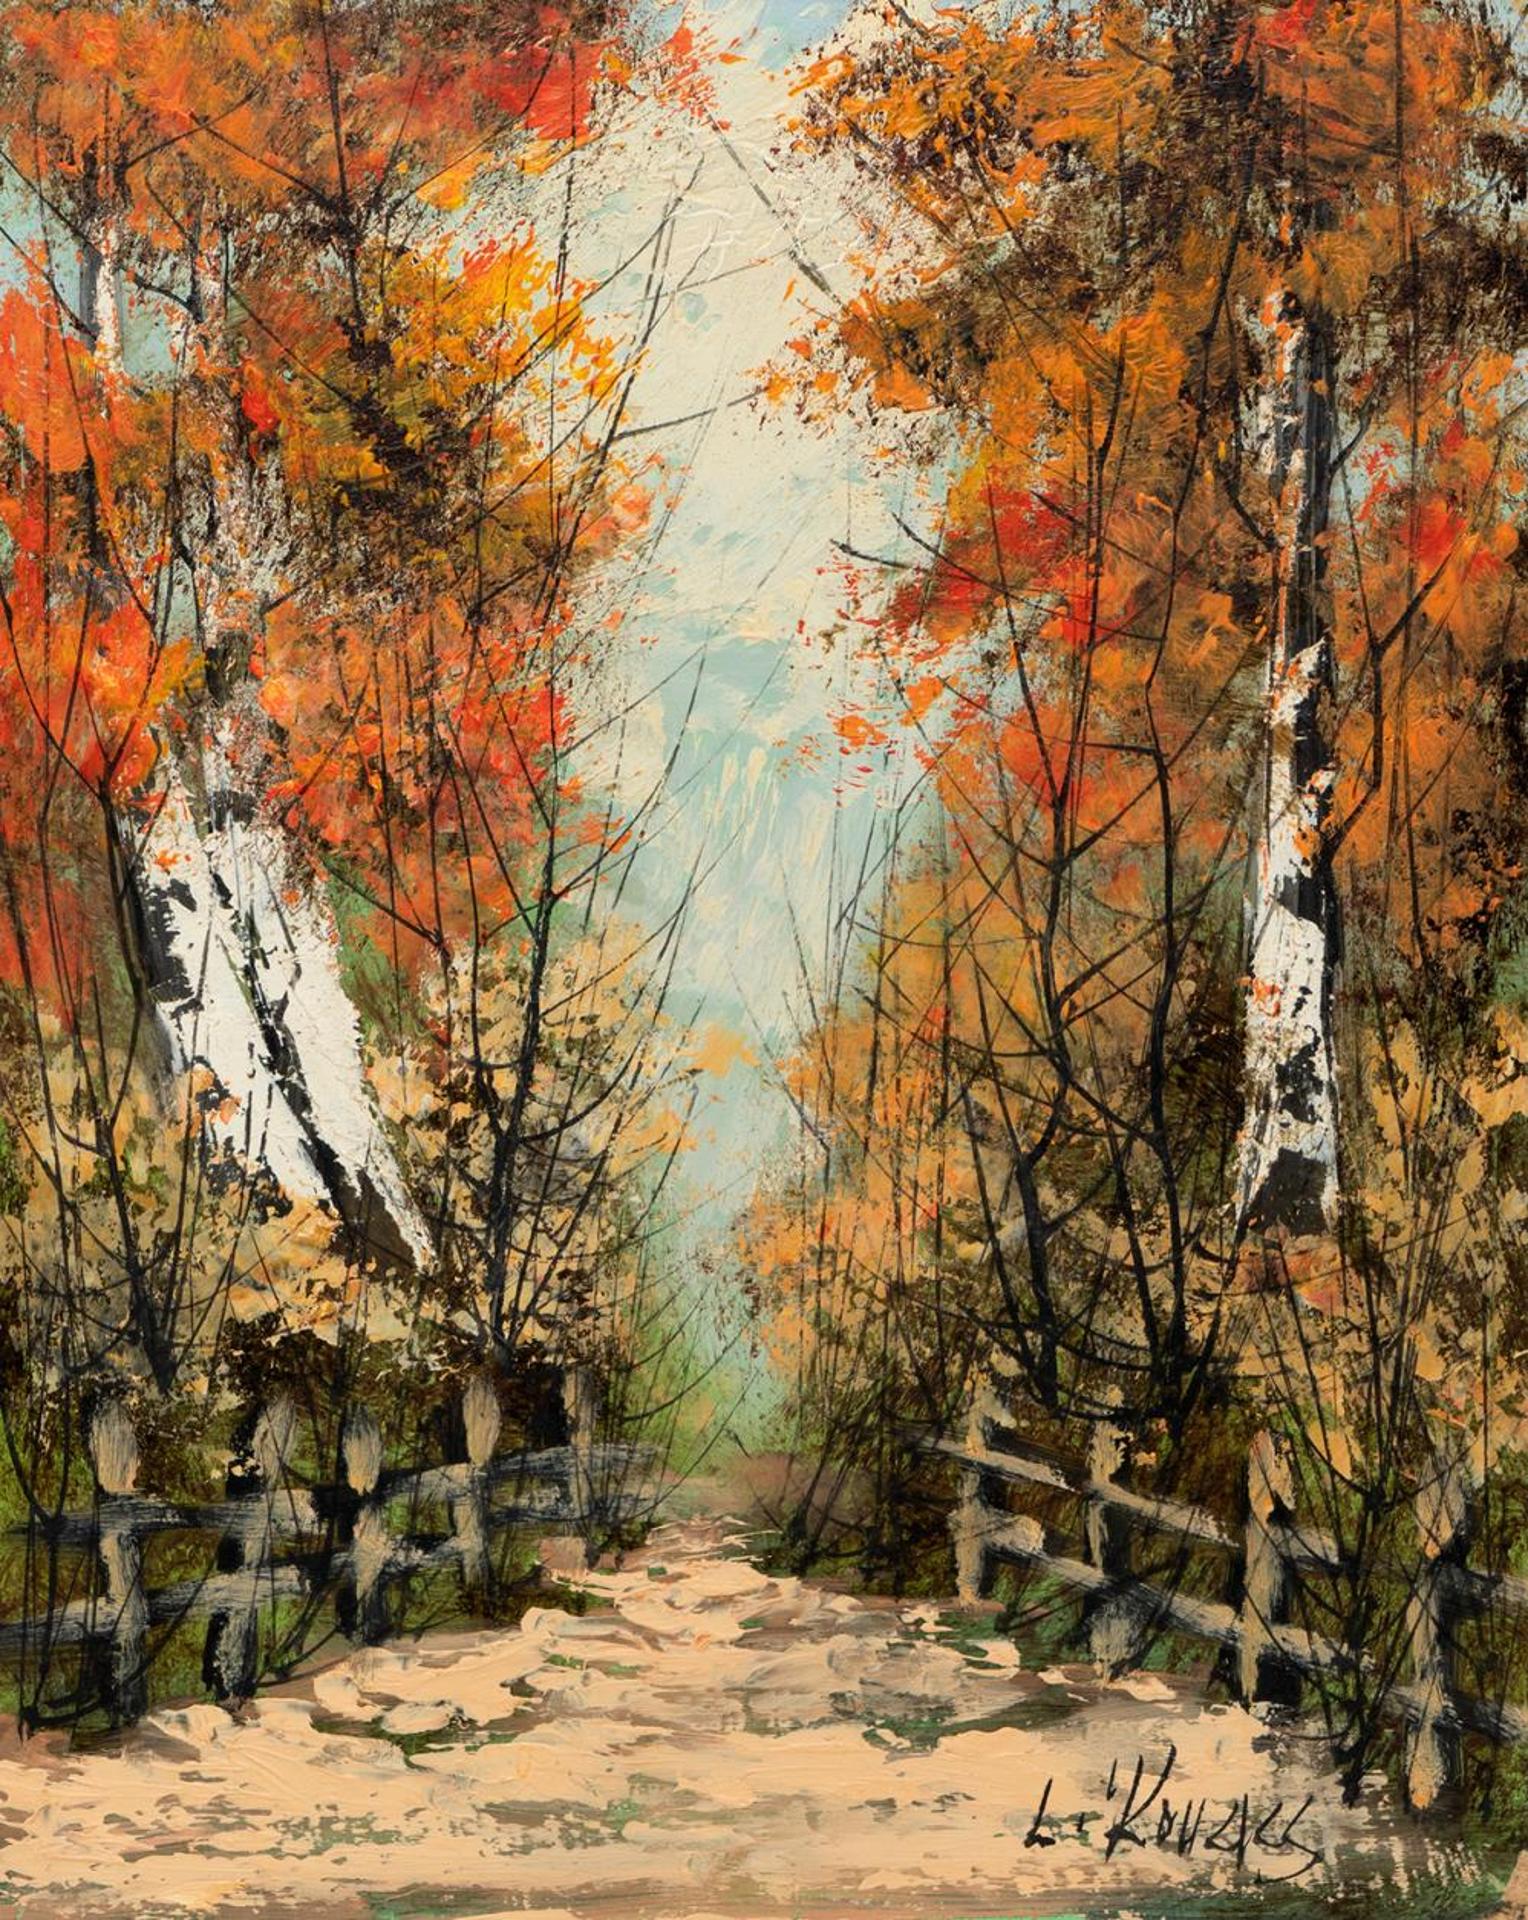 Les Kohak - Untitled - Autumn Road